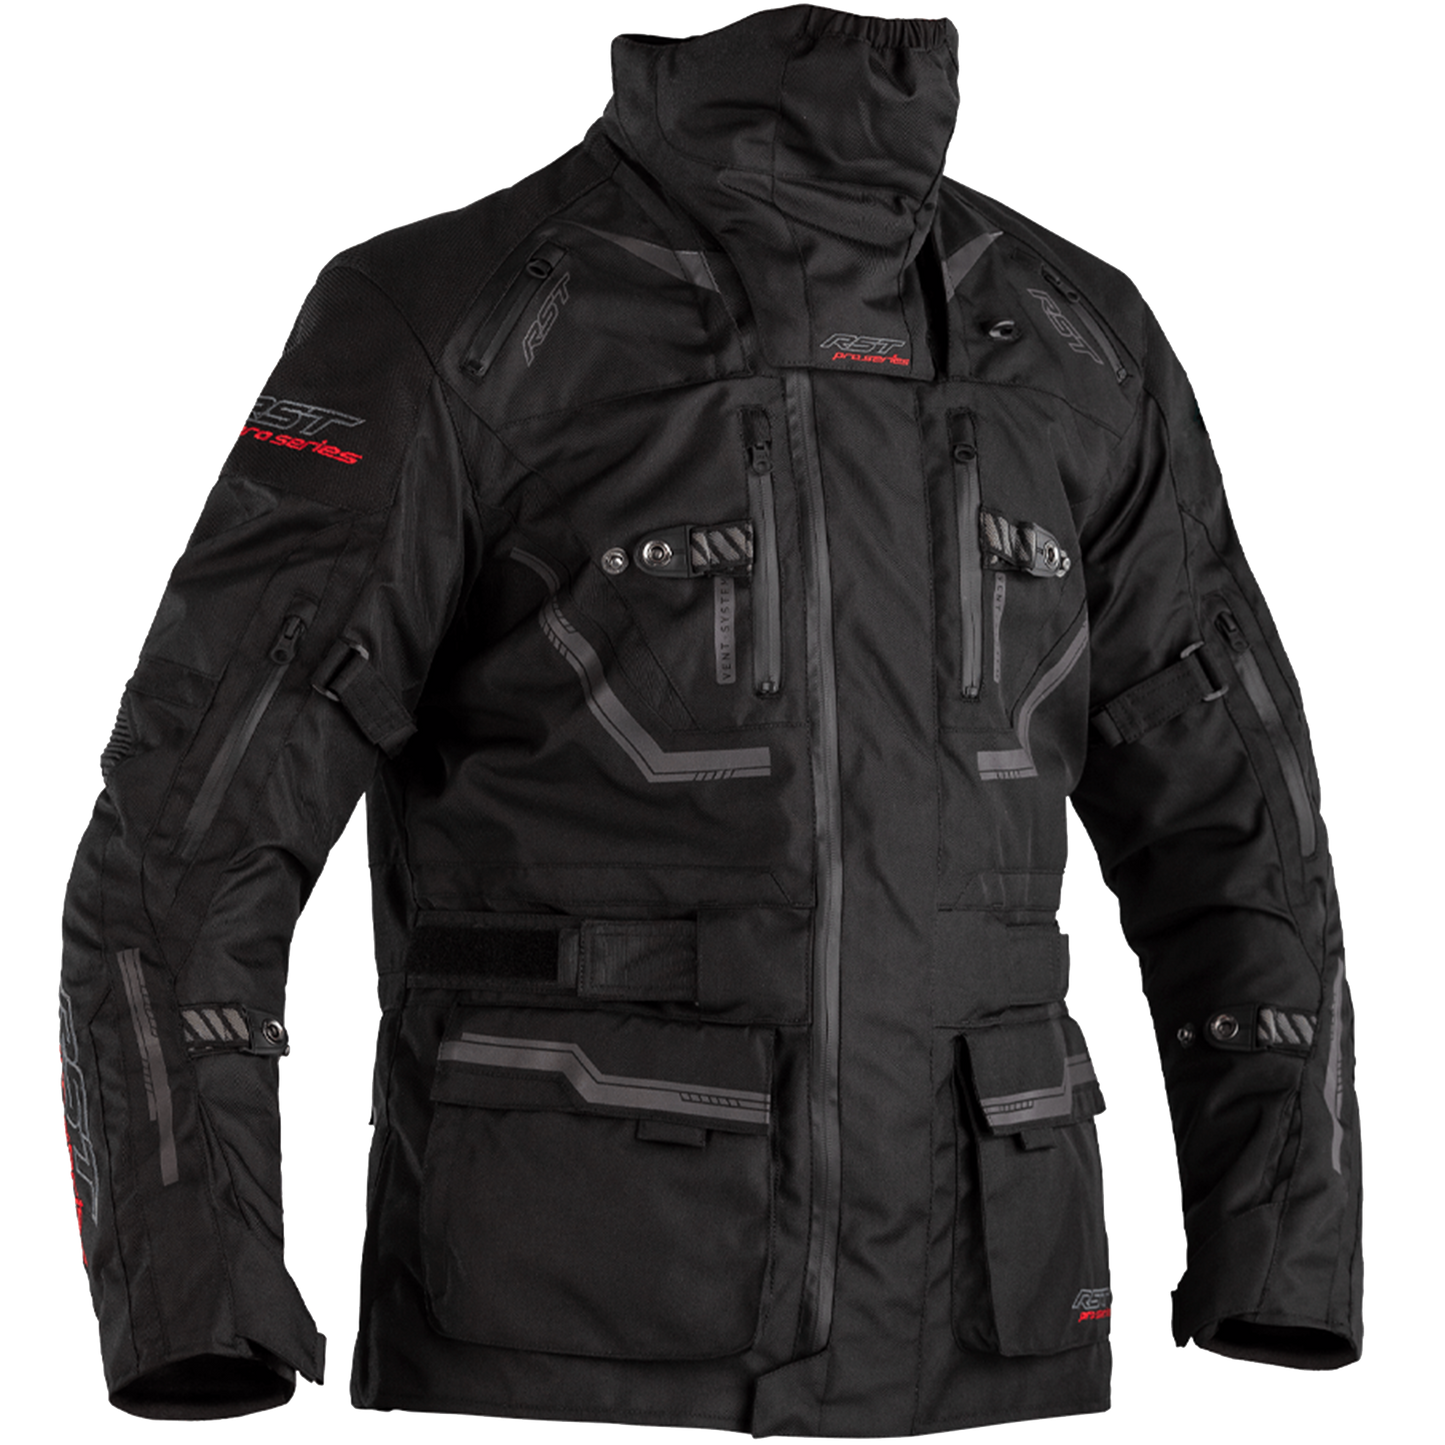 RST Paragon 6 Airbag (CE) Men's Textile Jacket - Black - (2561)